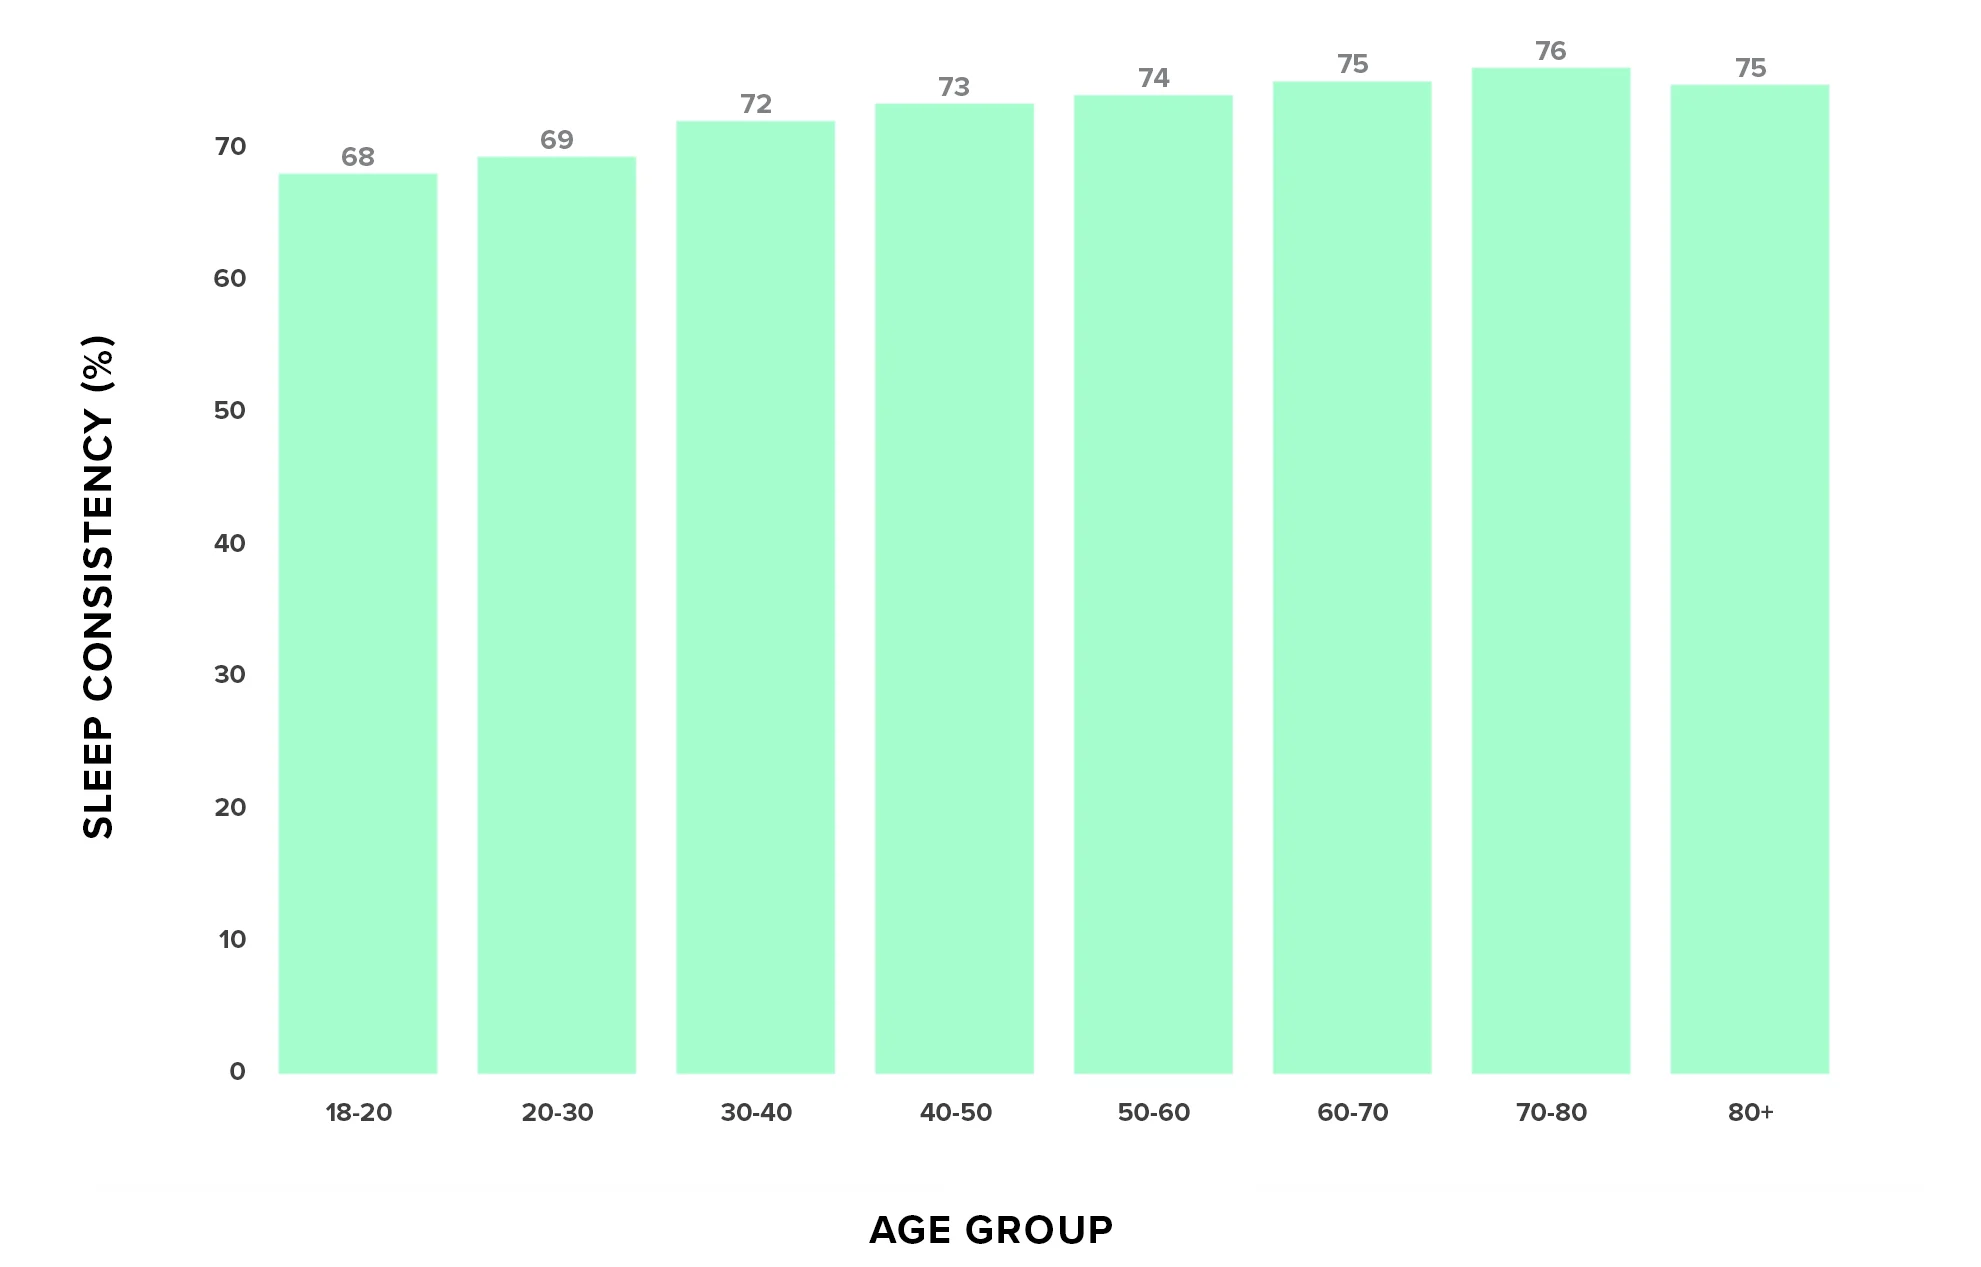 On average, WHOOP members' sleep consistency improves with age.